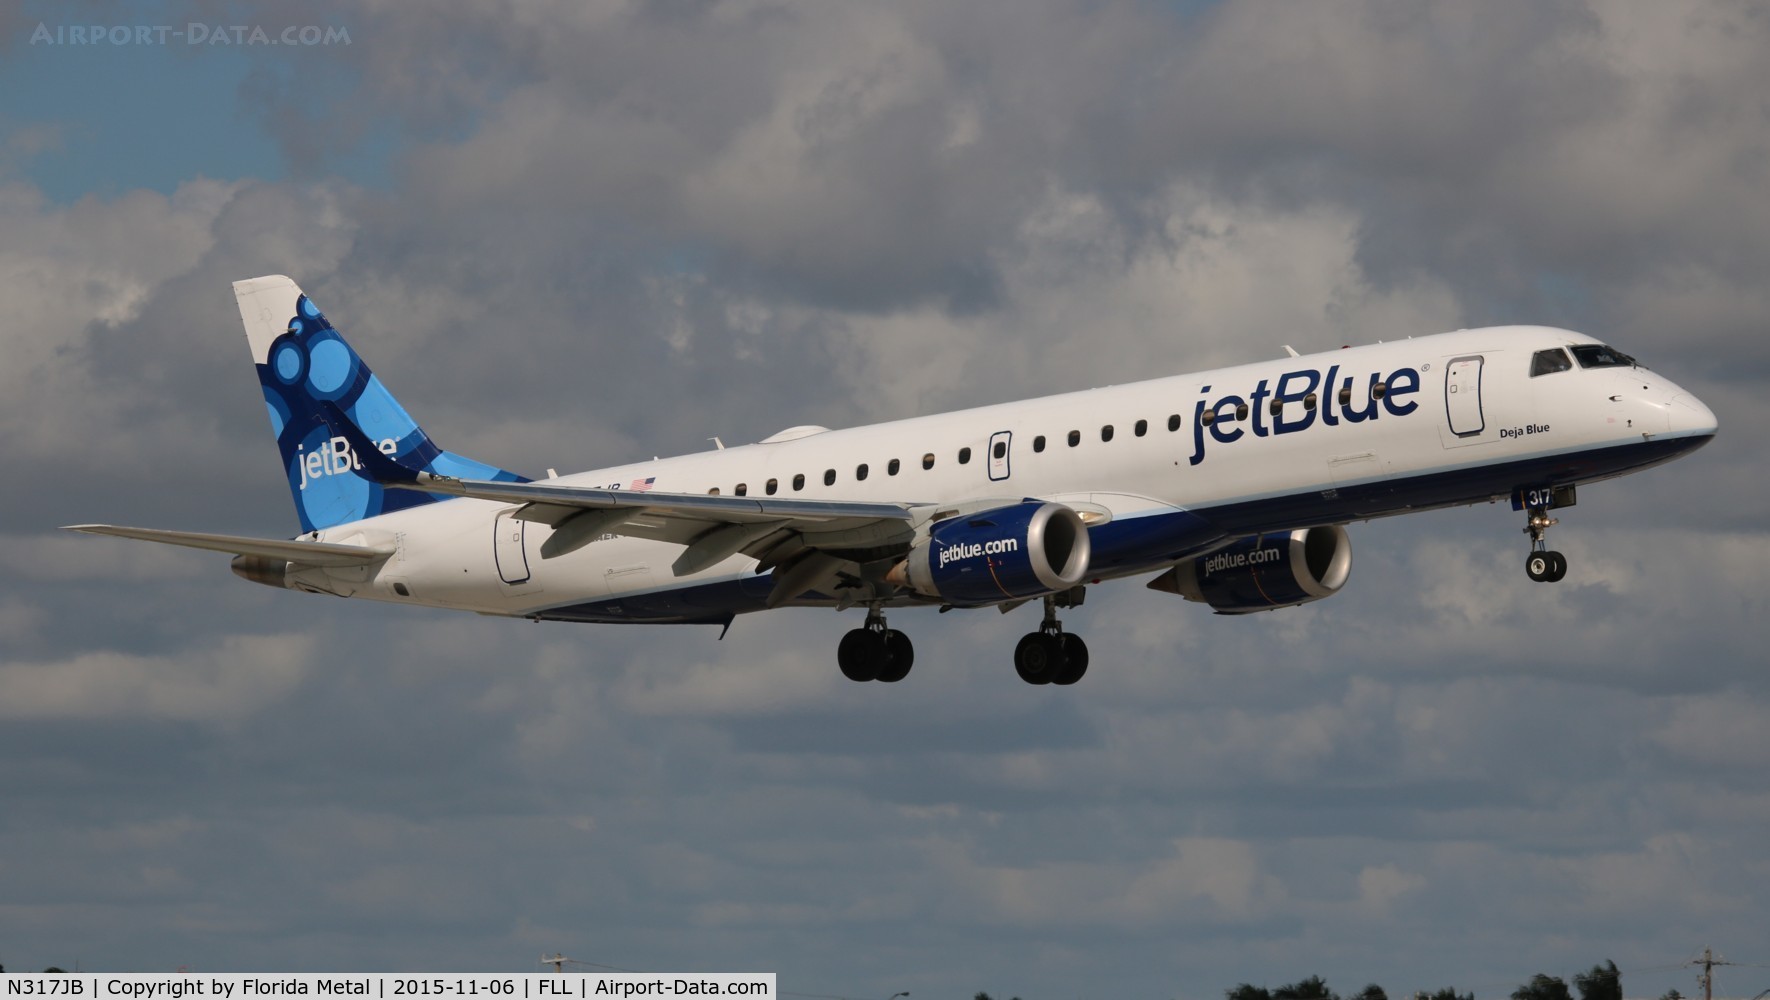 N317JB, 2010 Embraer ERJ-190-100 IGW 190AR C/N 19000363, Jet Blue